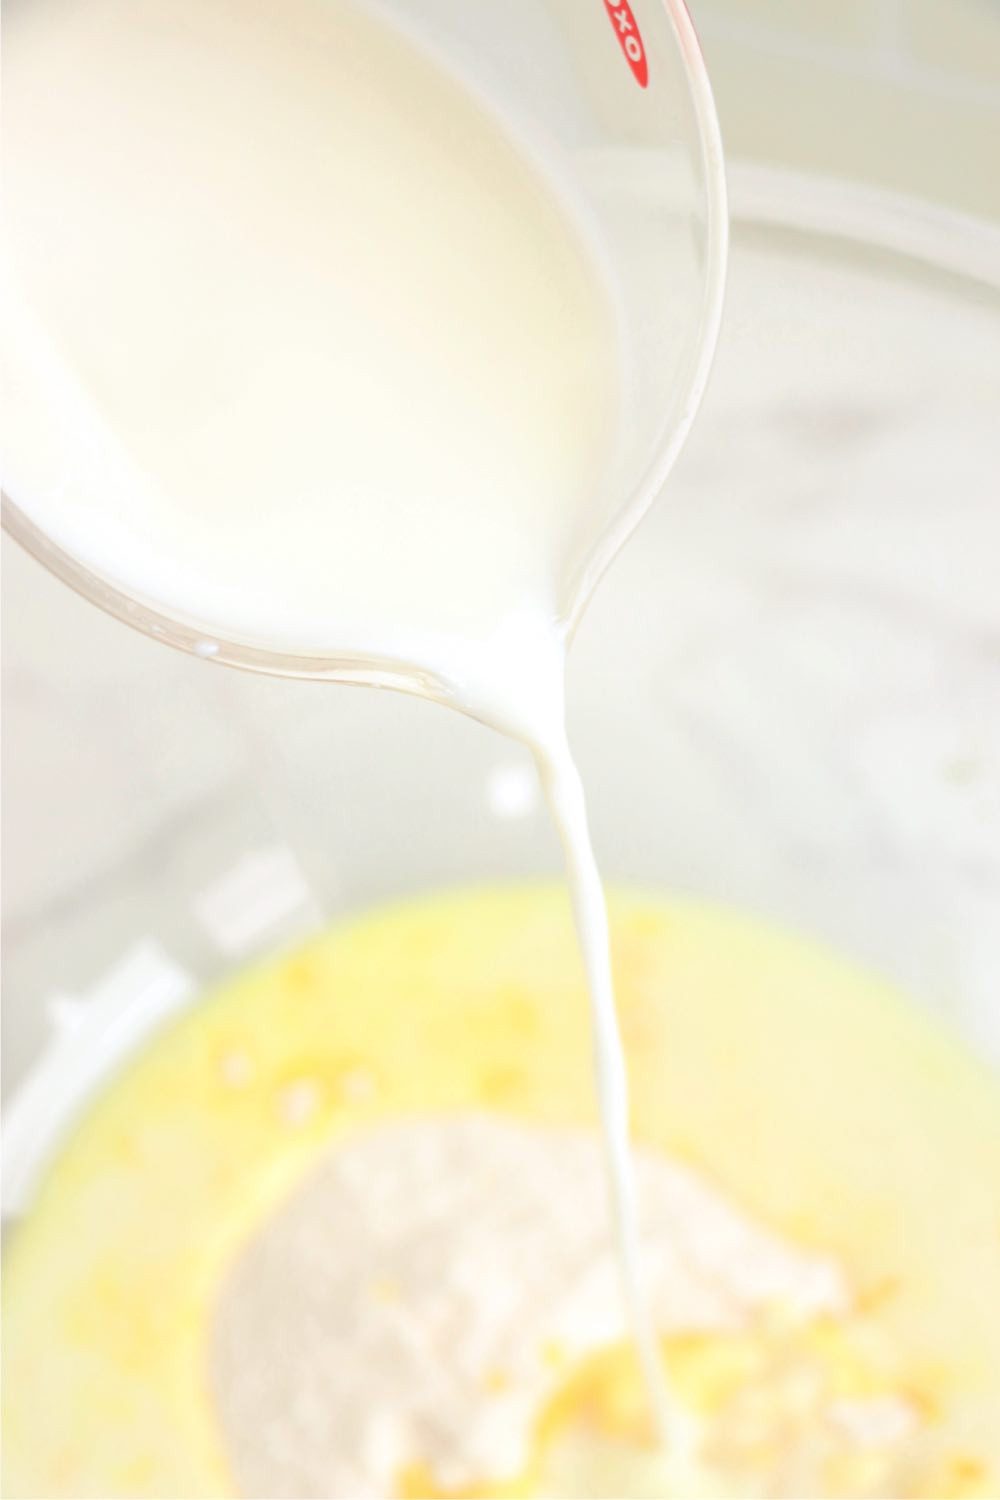 Adding milk to vanilla pudding in a bowl